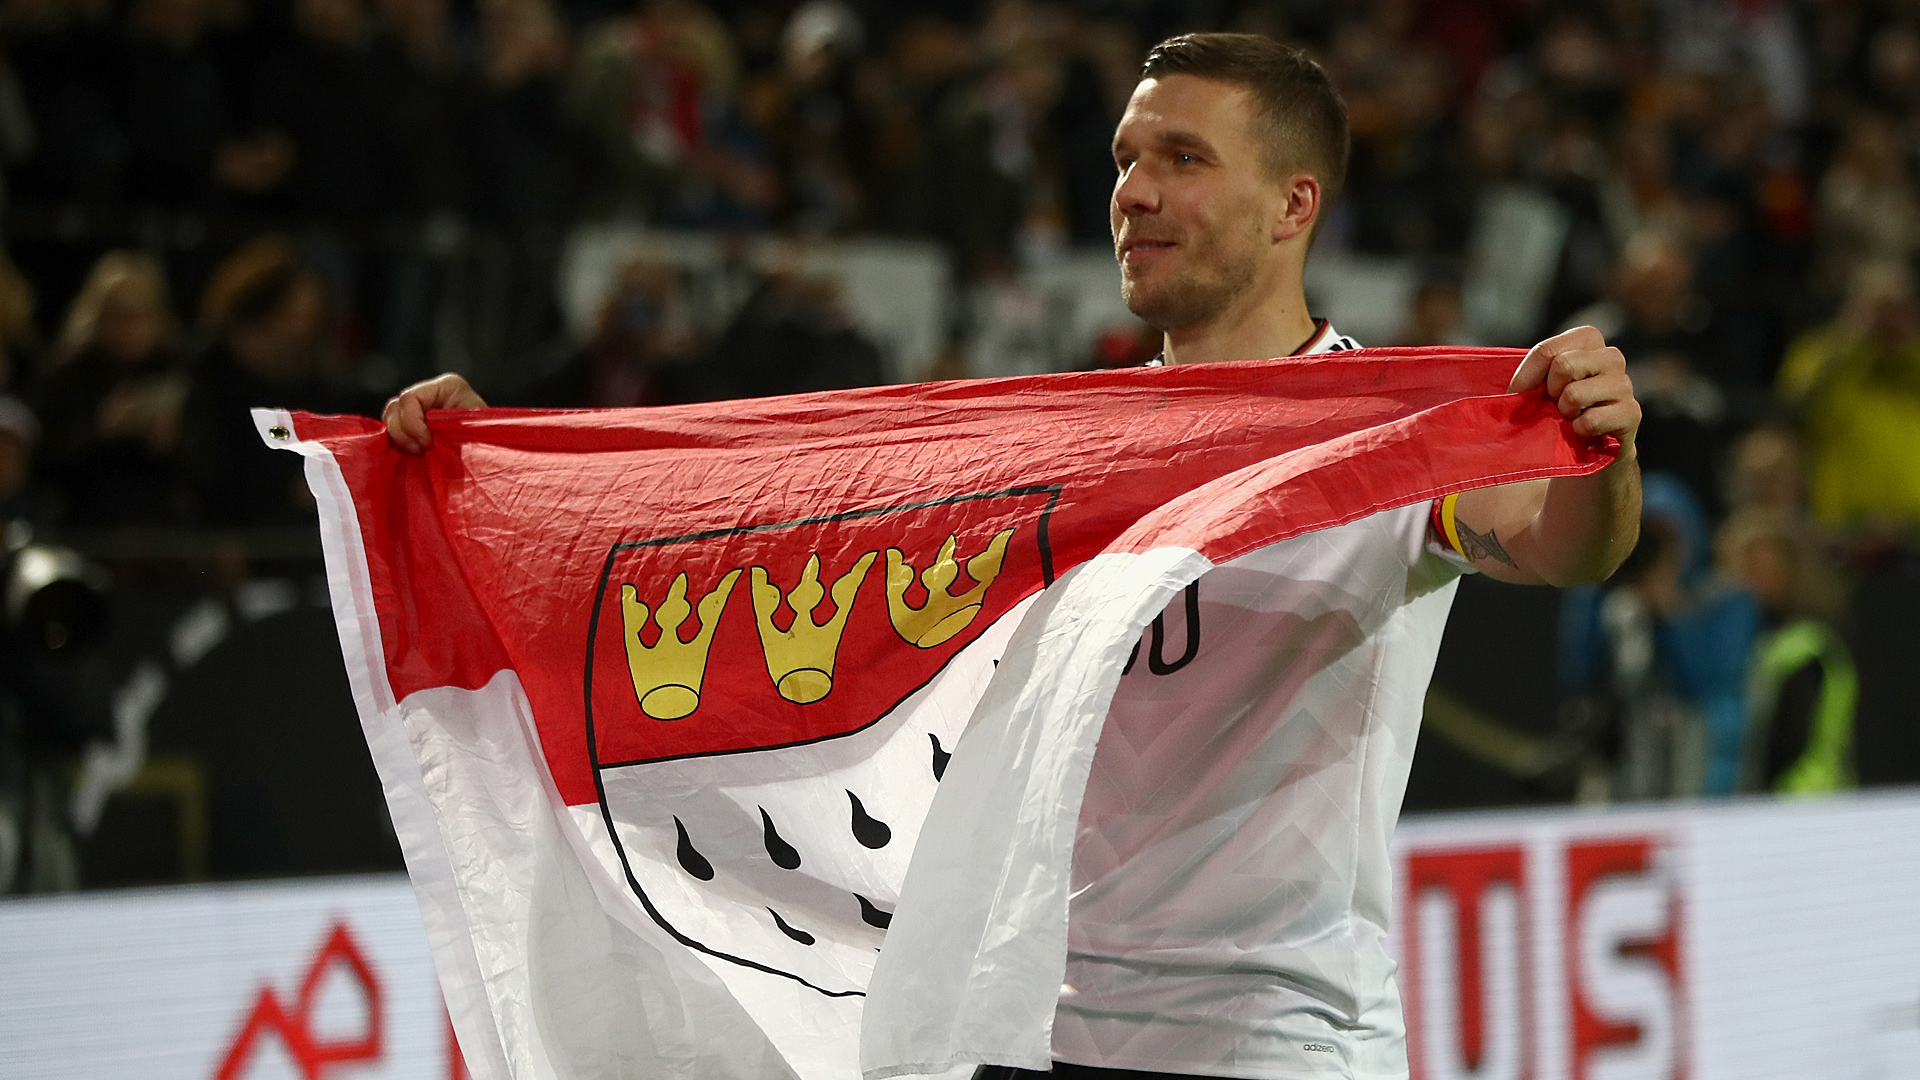 OFFICIEL - Lukas Podolski rejoint Antalyaspor